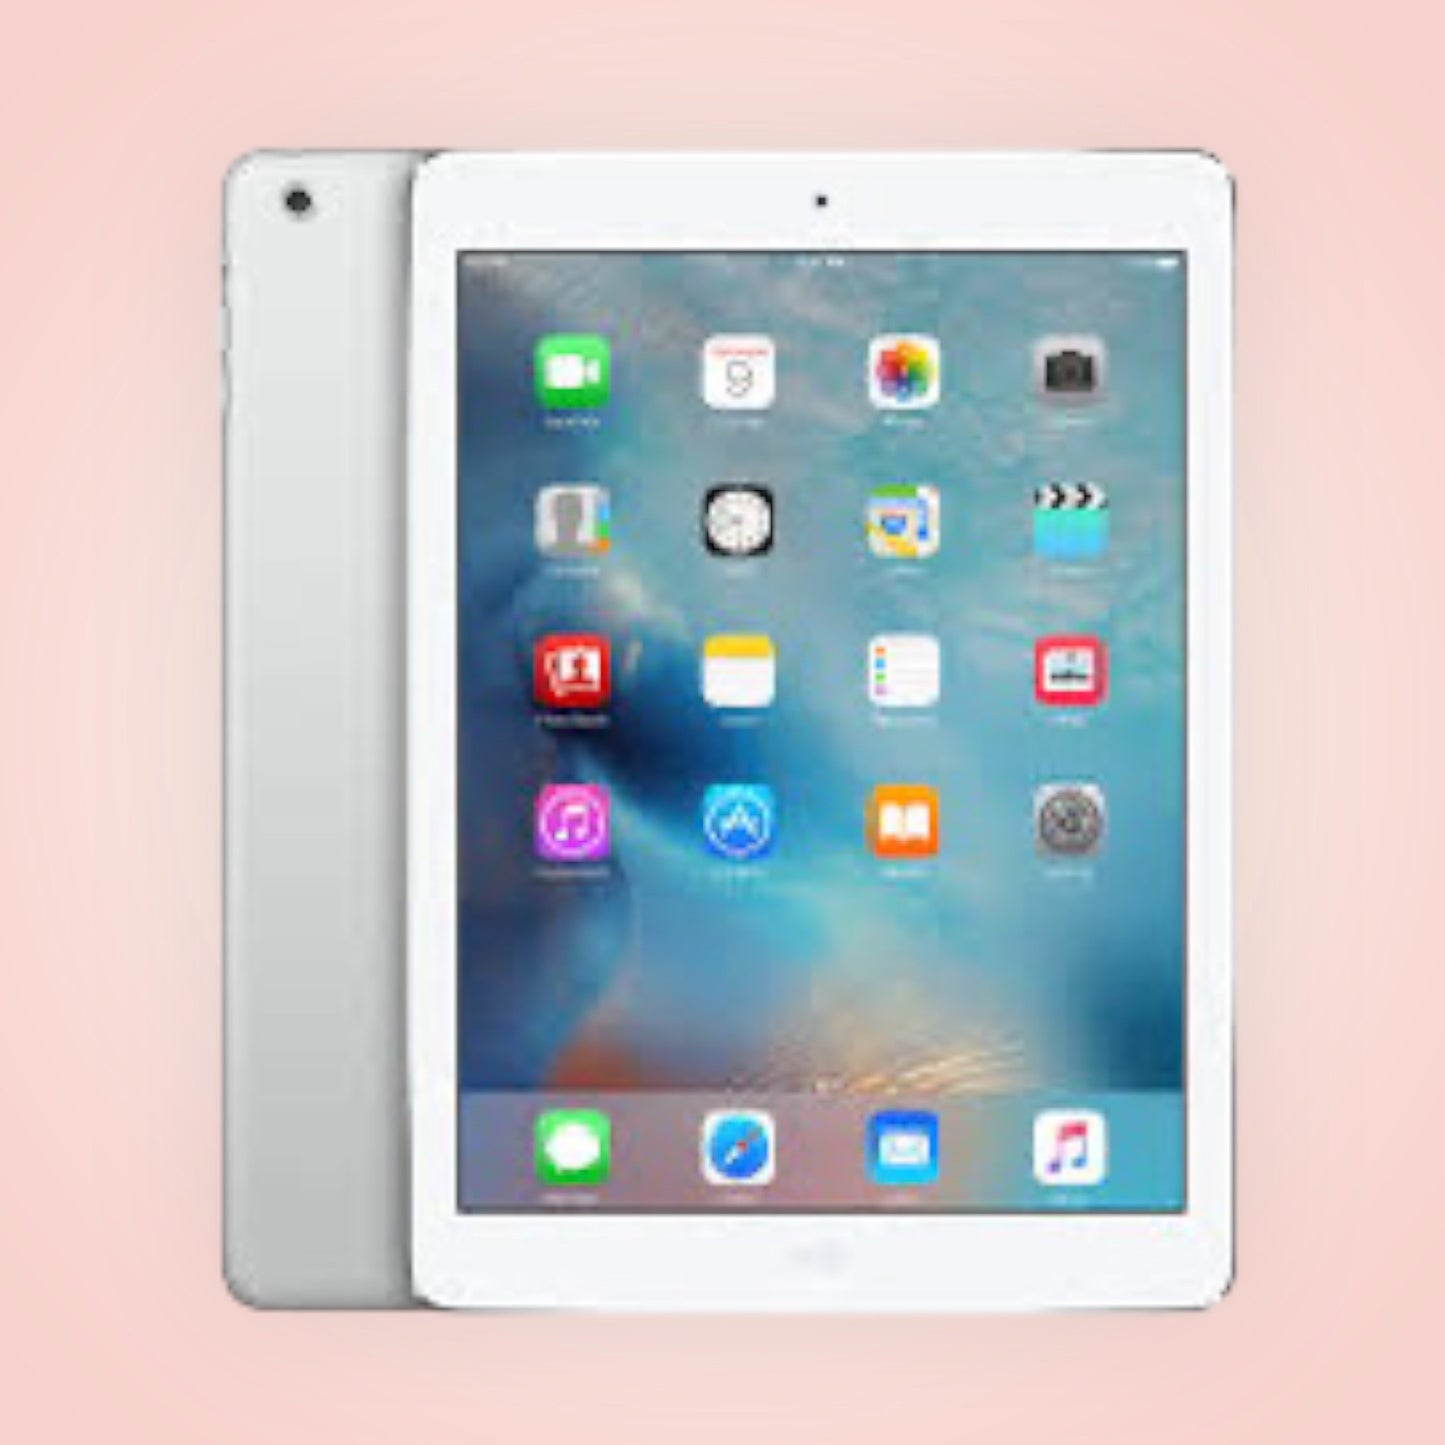 iPad Mini 2 - White - 16GB - CDMA GSM Unlocked